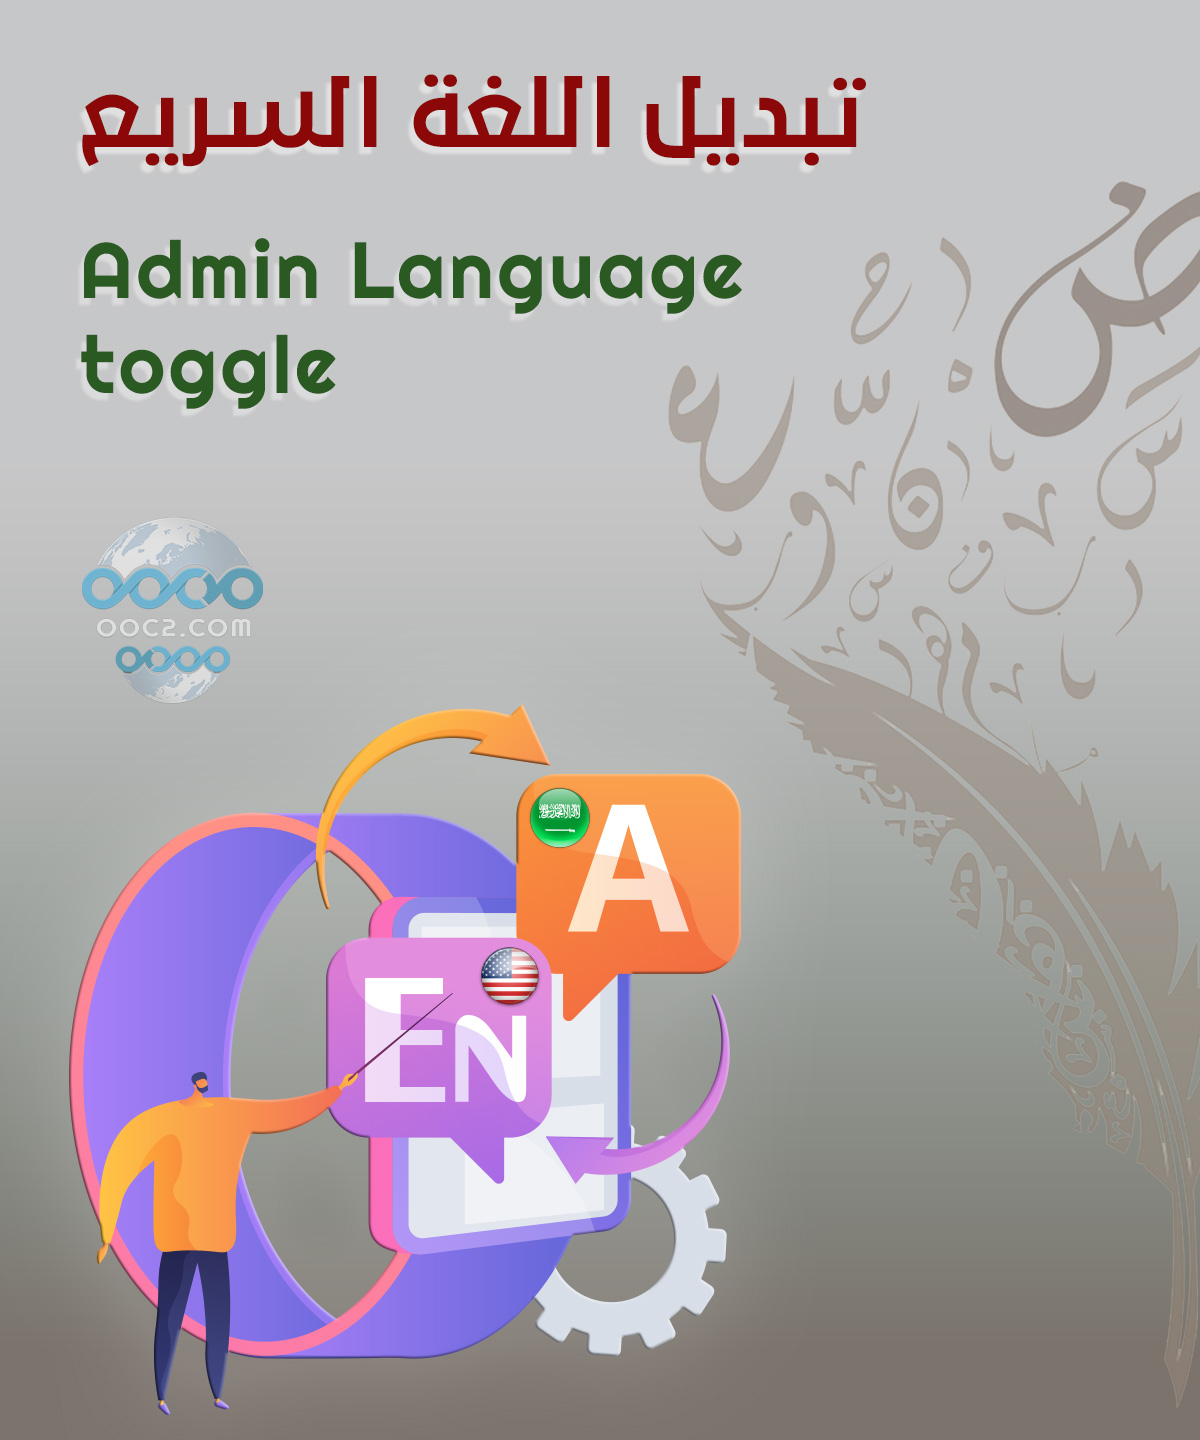 Admin Language toggle